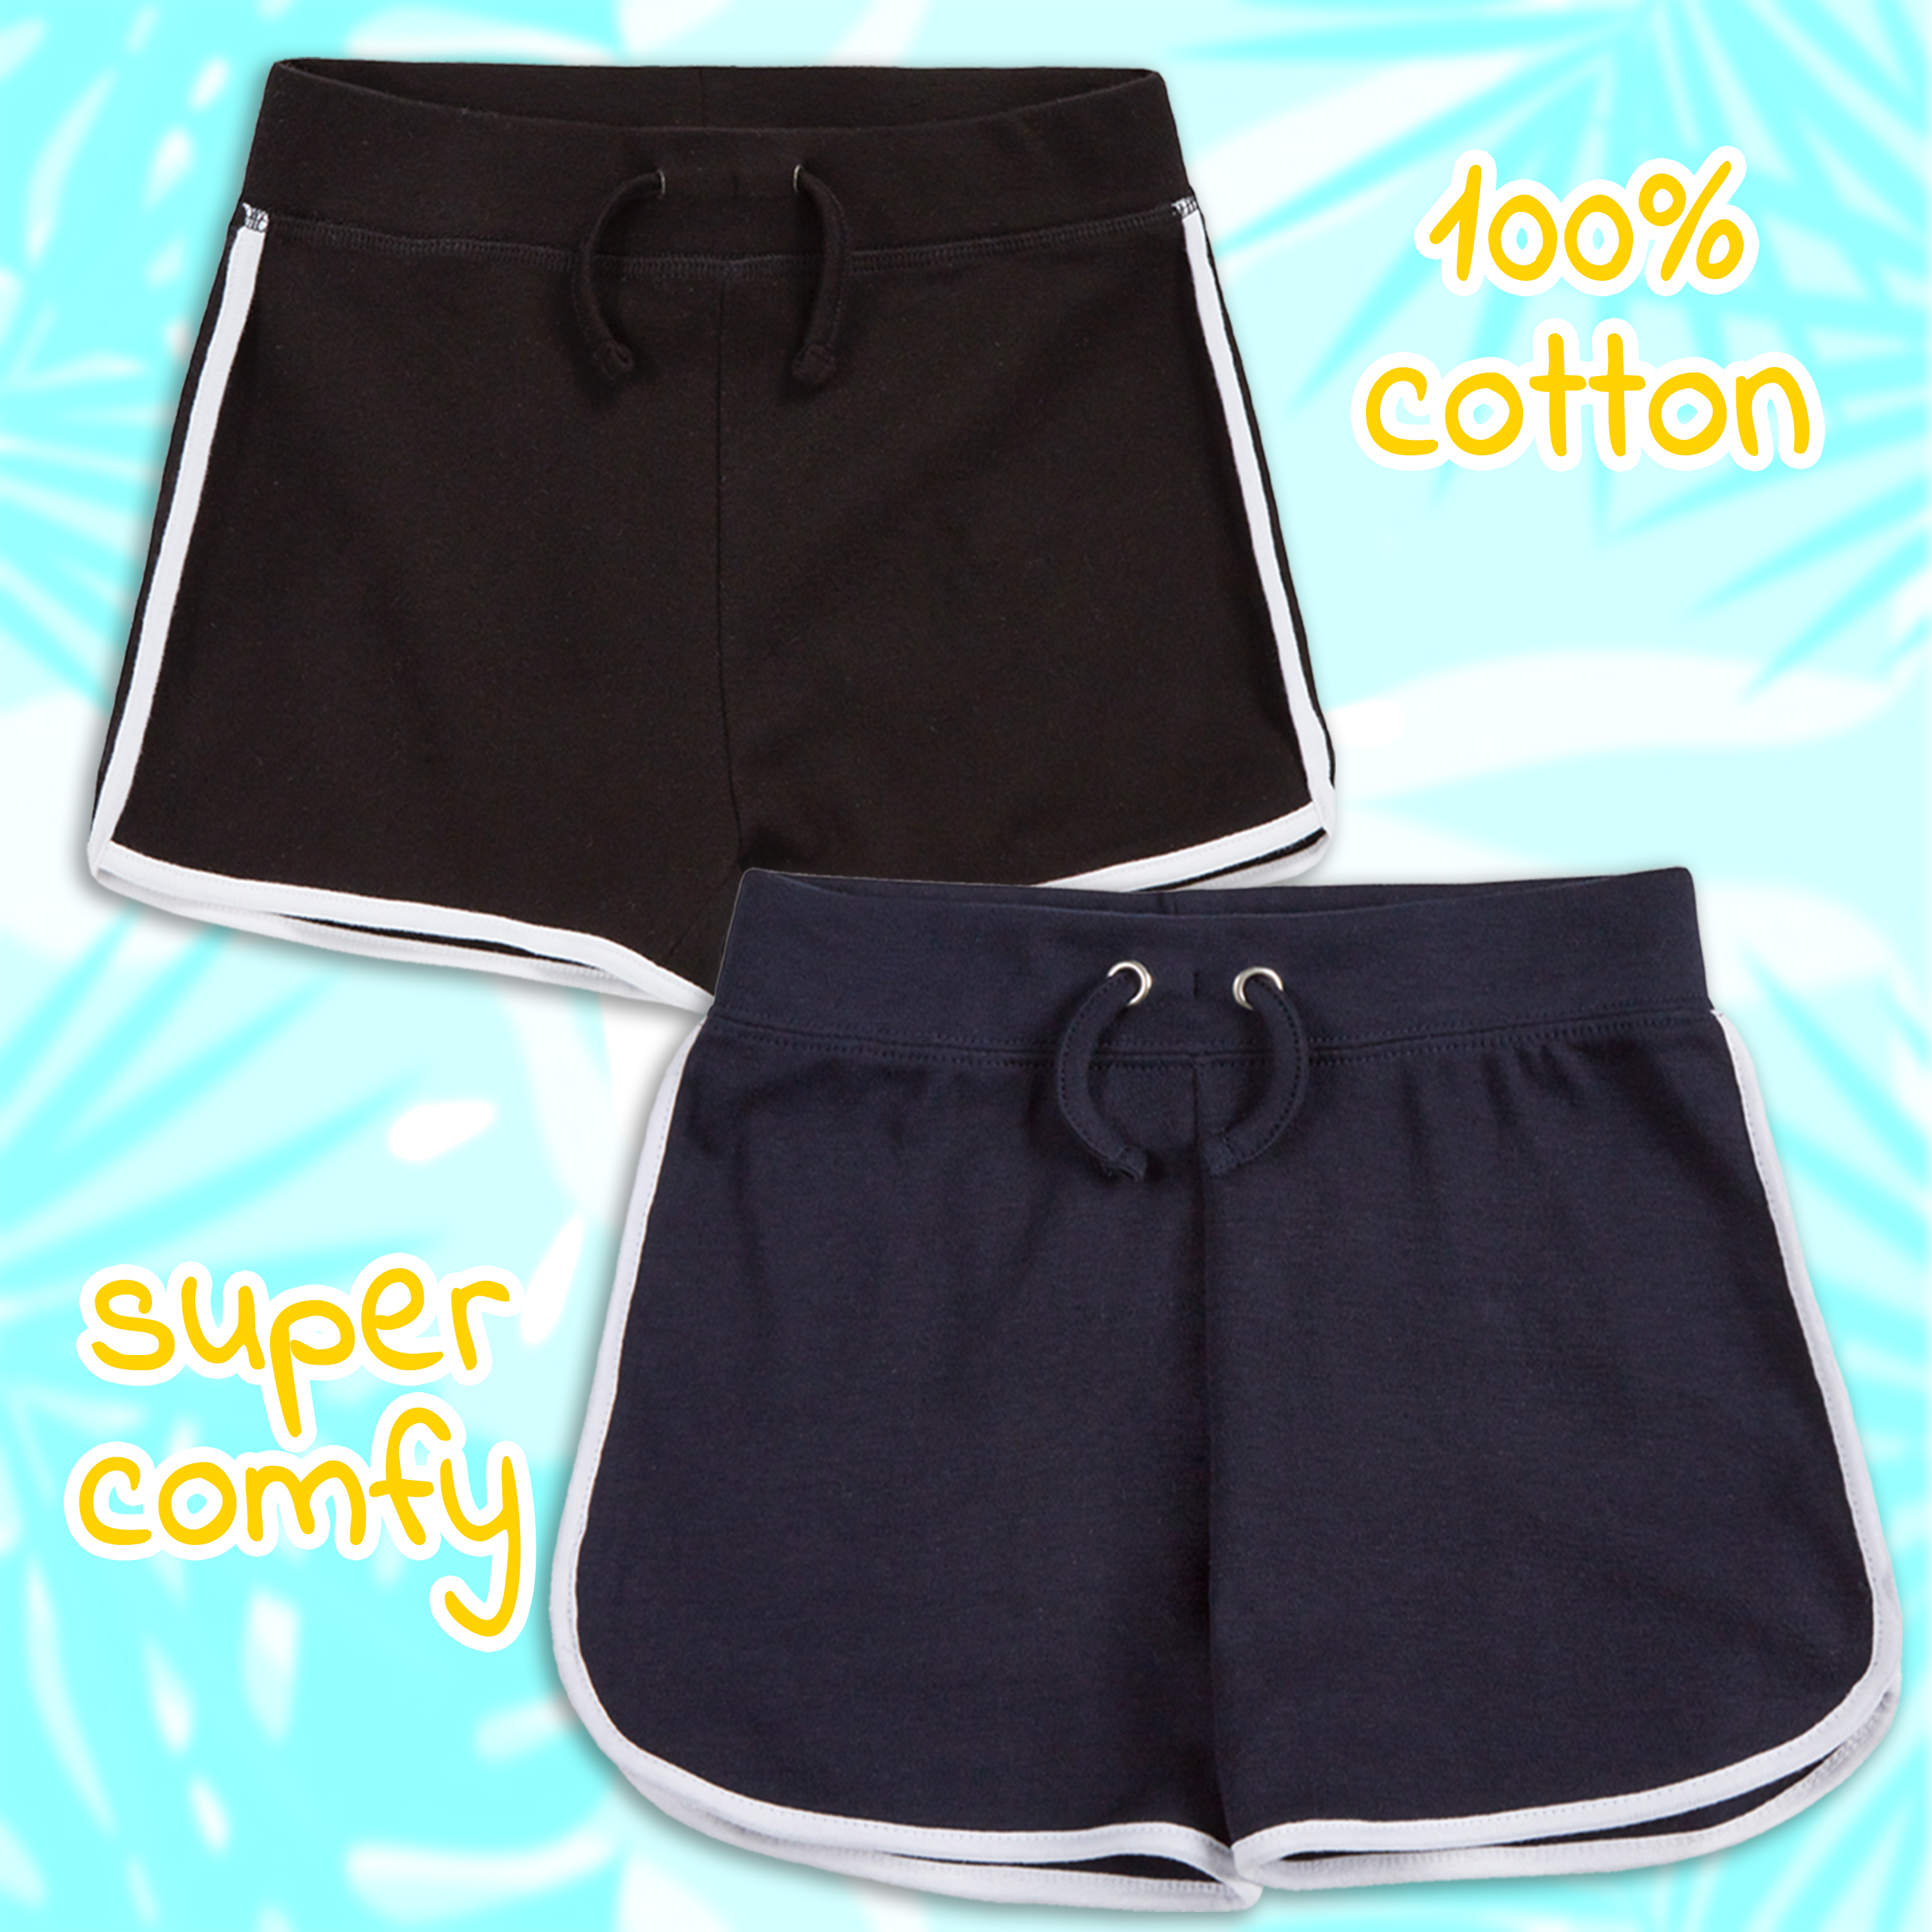 Girls 100% Cotton Retro Stripe Shorts Kids 2 Pack Shorts Summer Holiday Bottoms Hot Pants Beach Garden Bundle 2-3 3-4 4-5 5-6 7-8 9-10 11-10 13 Years 